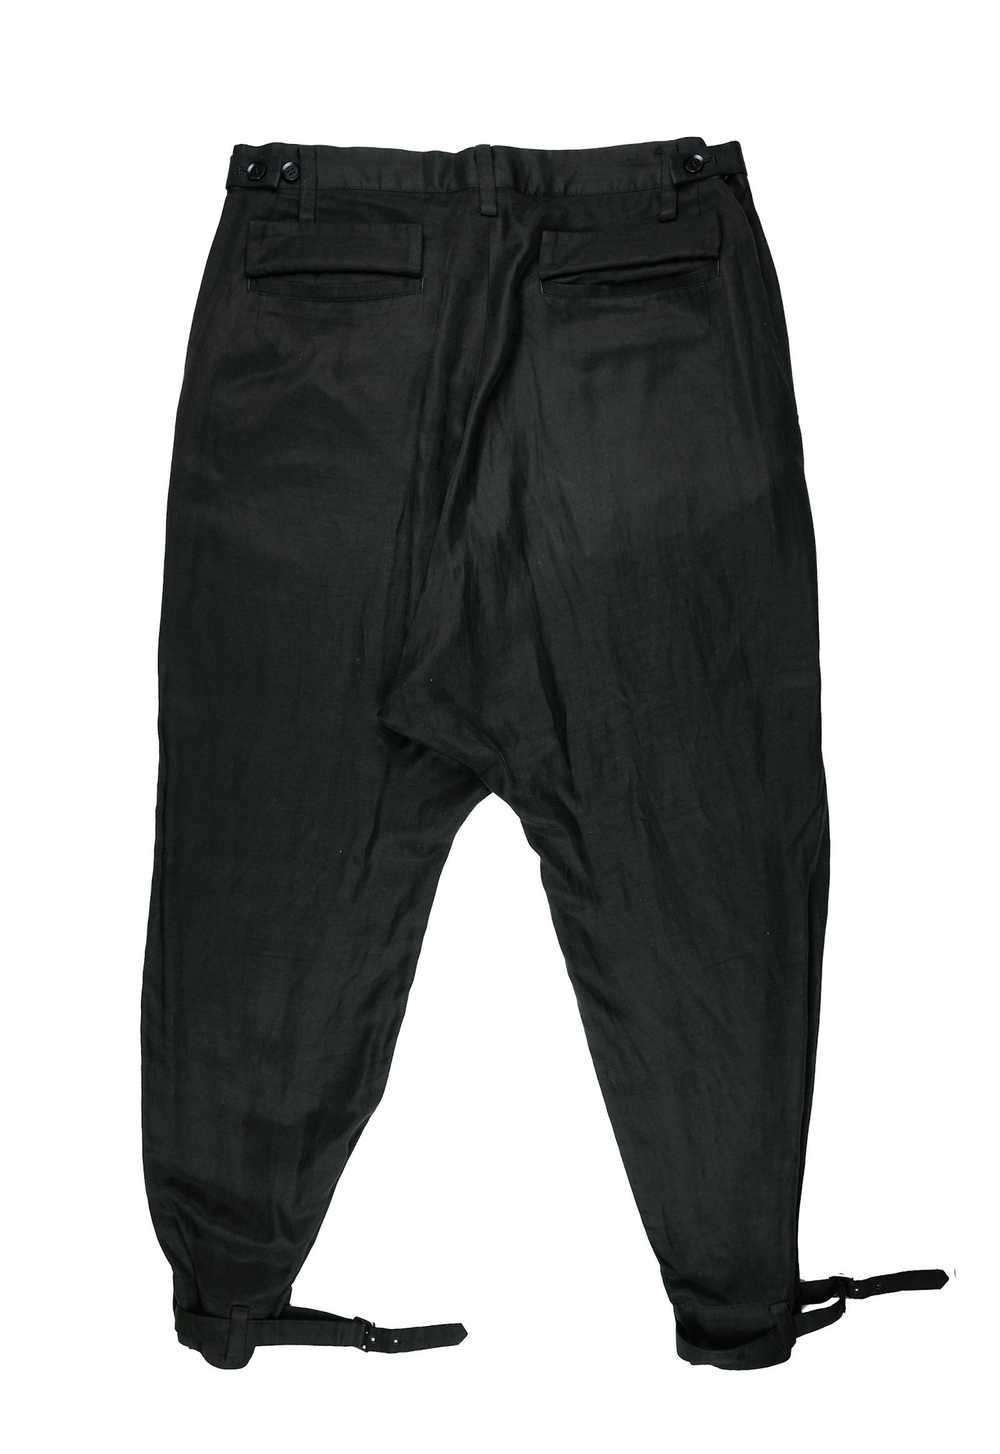 Yohji Yamamoto Black Bondage Pants - image 2